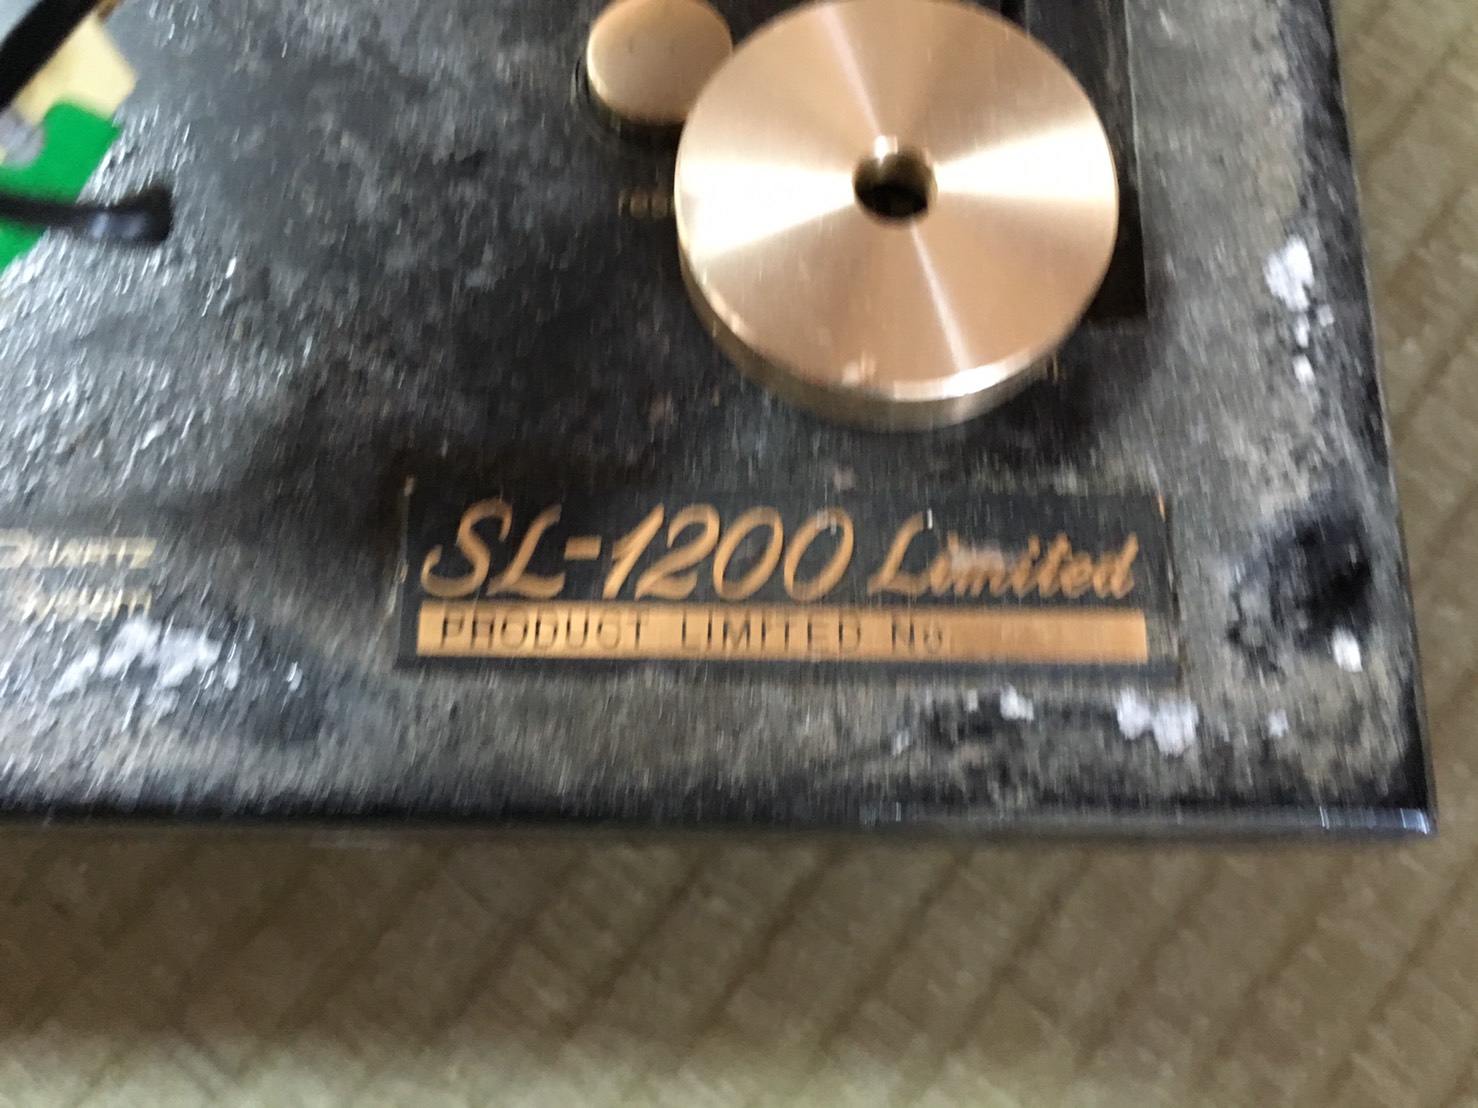 SL-1200 Limited